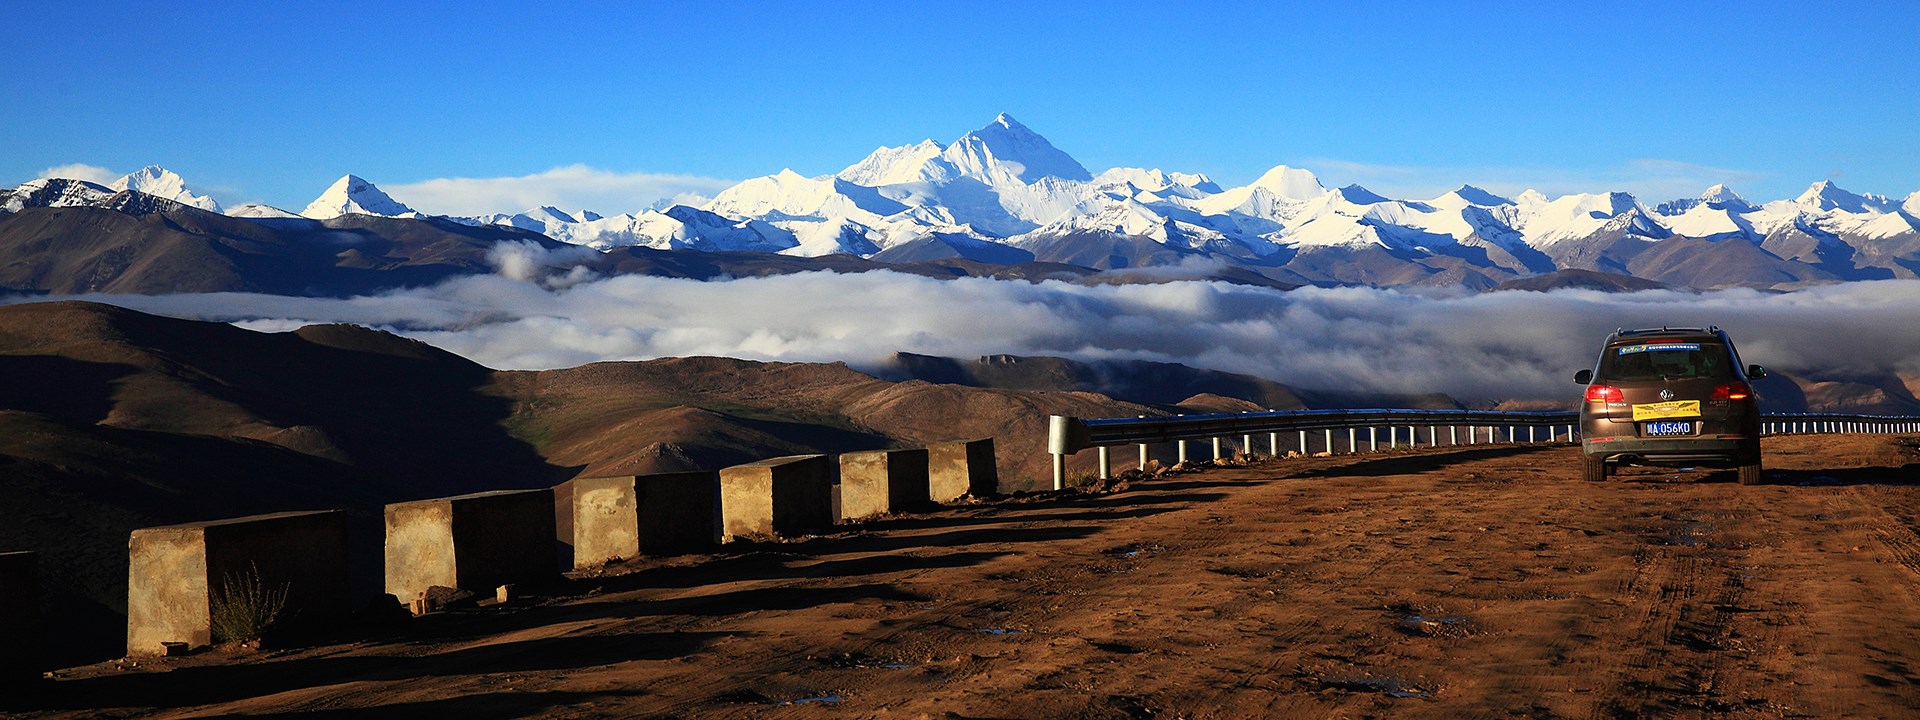 Overland Tour from Lhasa via Everest BC to Kathmandu